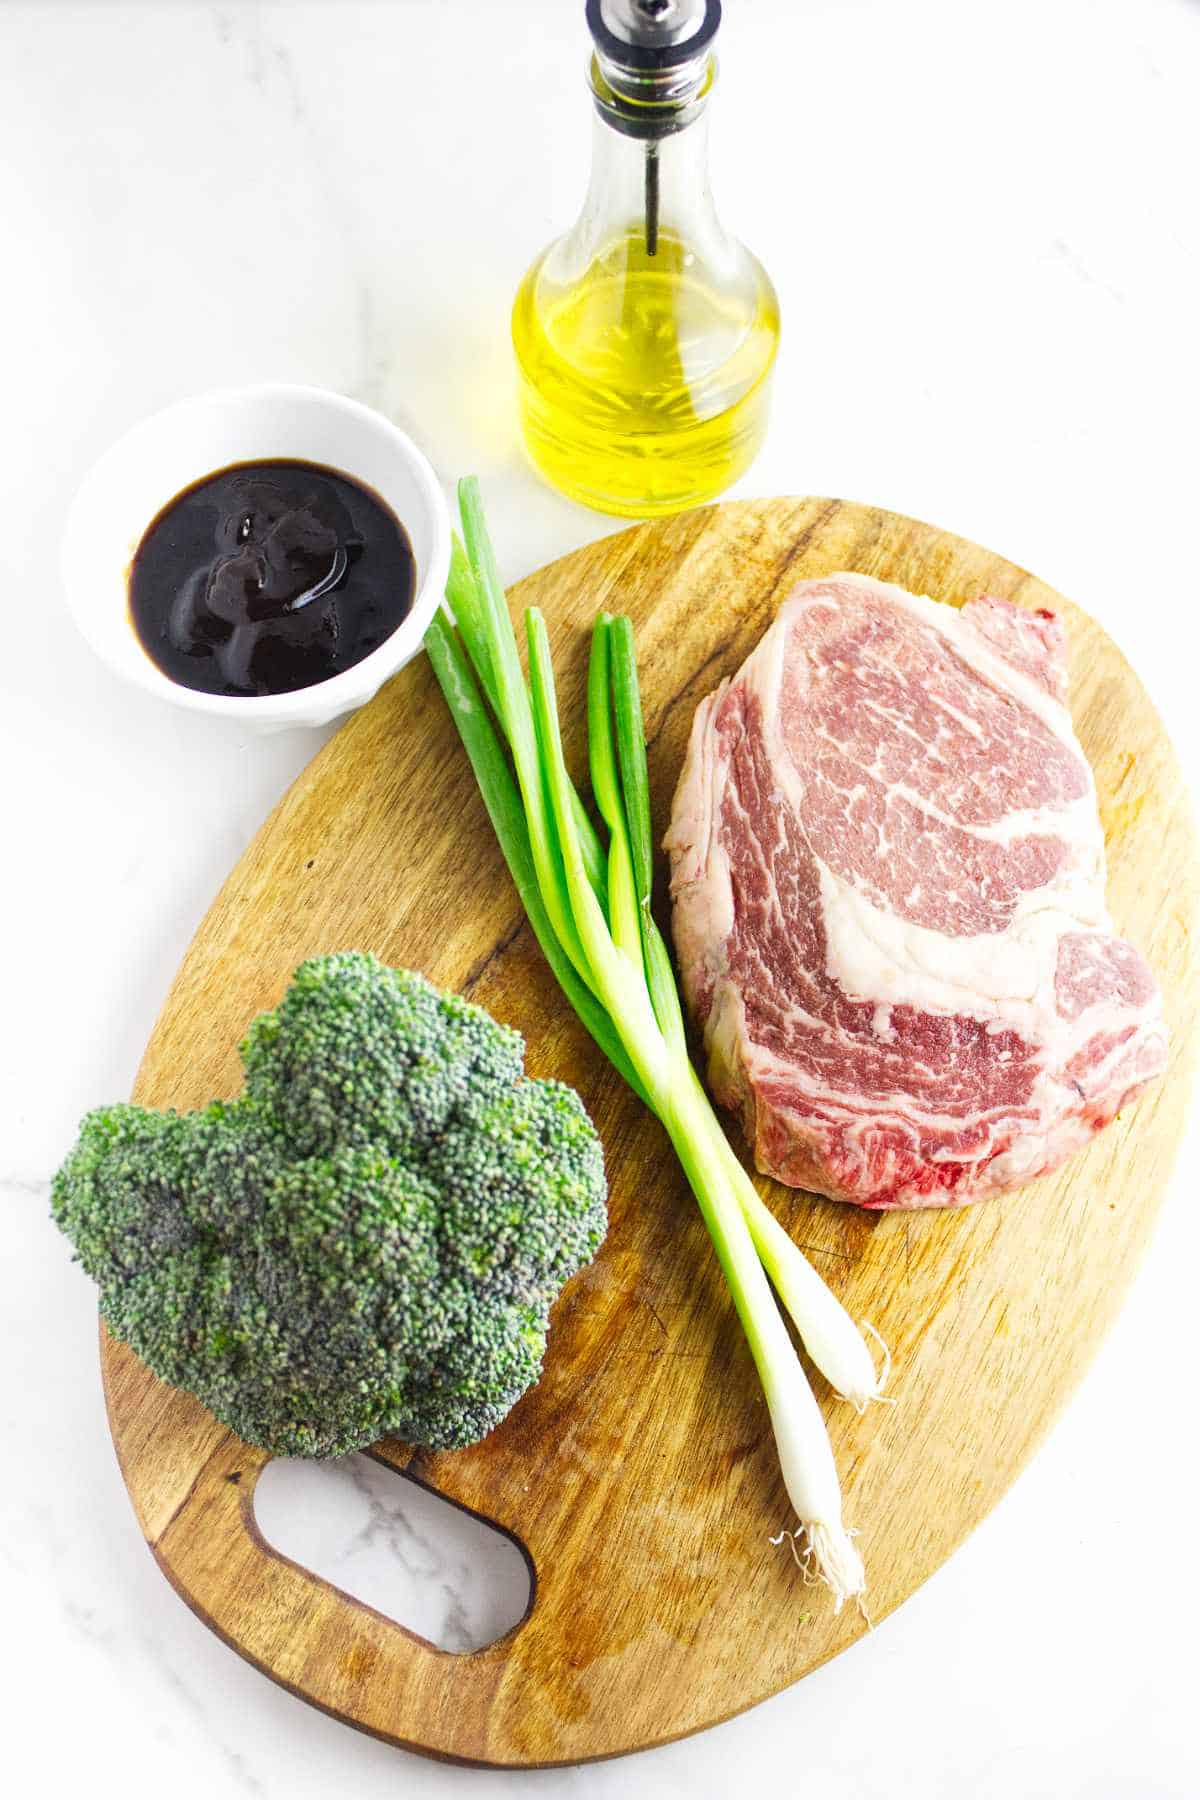 broccoli, green onions, teppanyaki grill sauce, olive oil, andn ribeye steak for blackstone grilling.